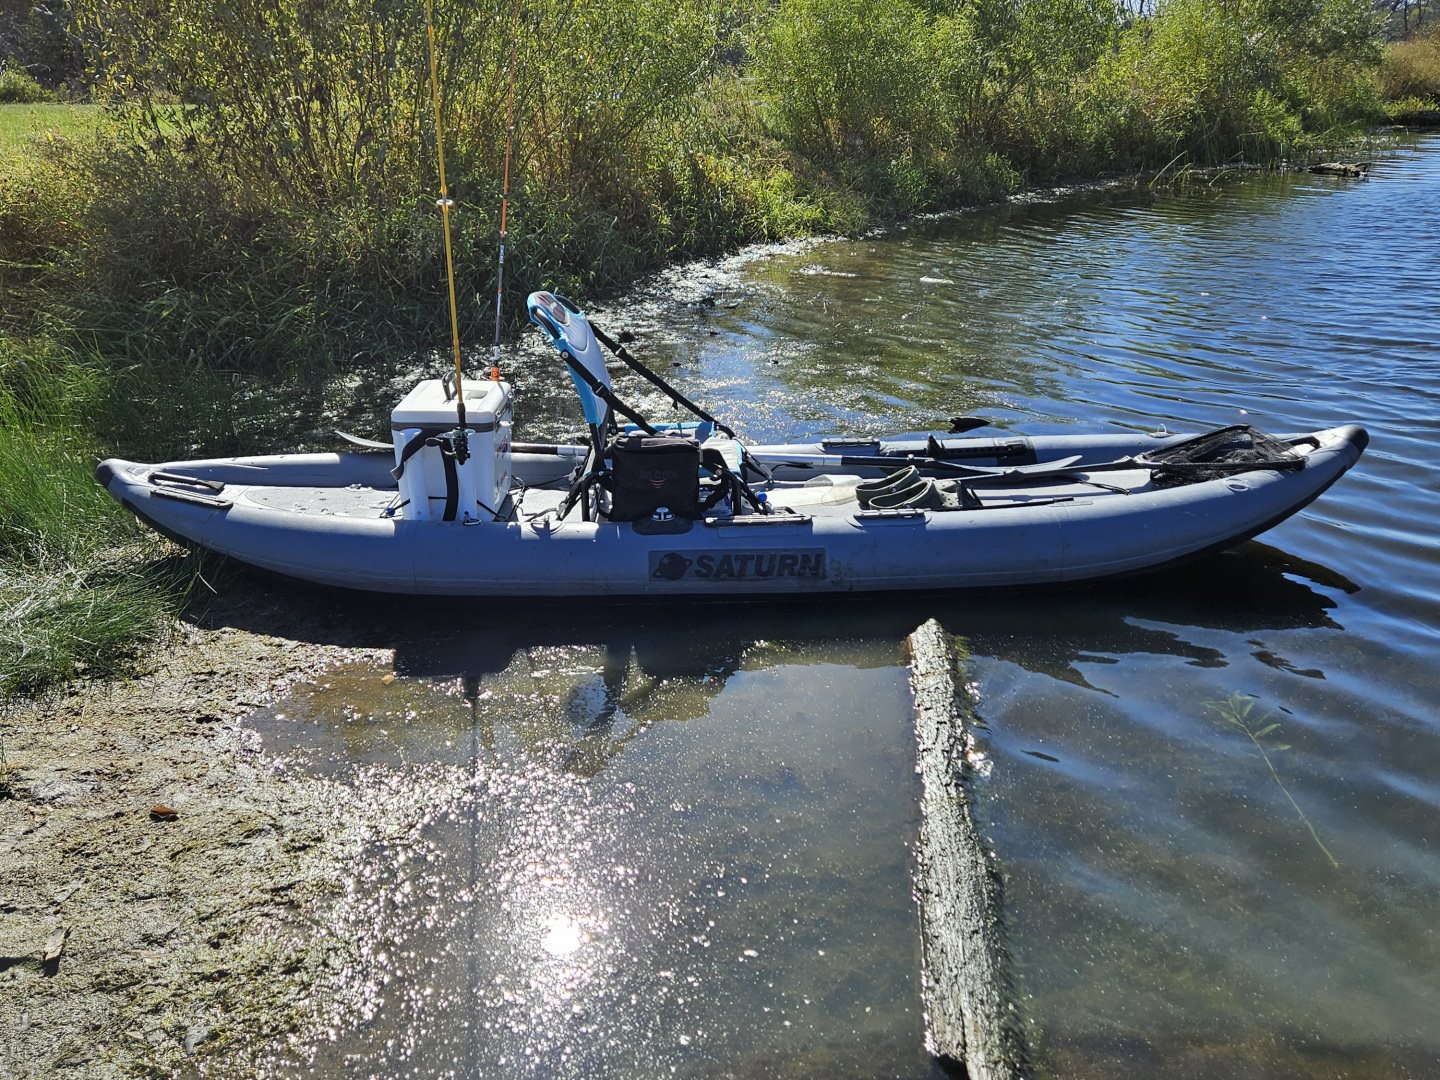 12' Saturn Tandem Inflatable Kayaks IK365. Portable, affordable